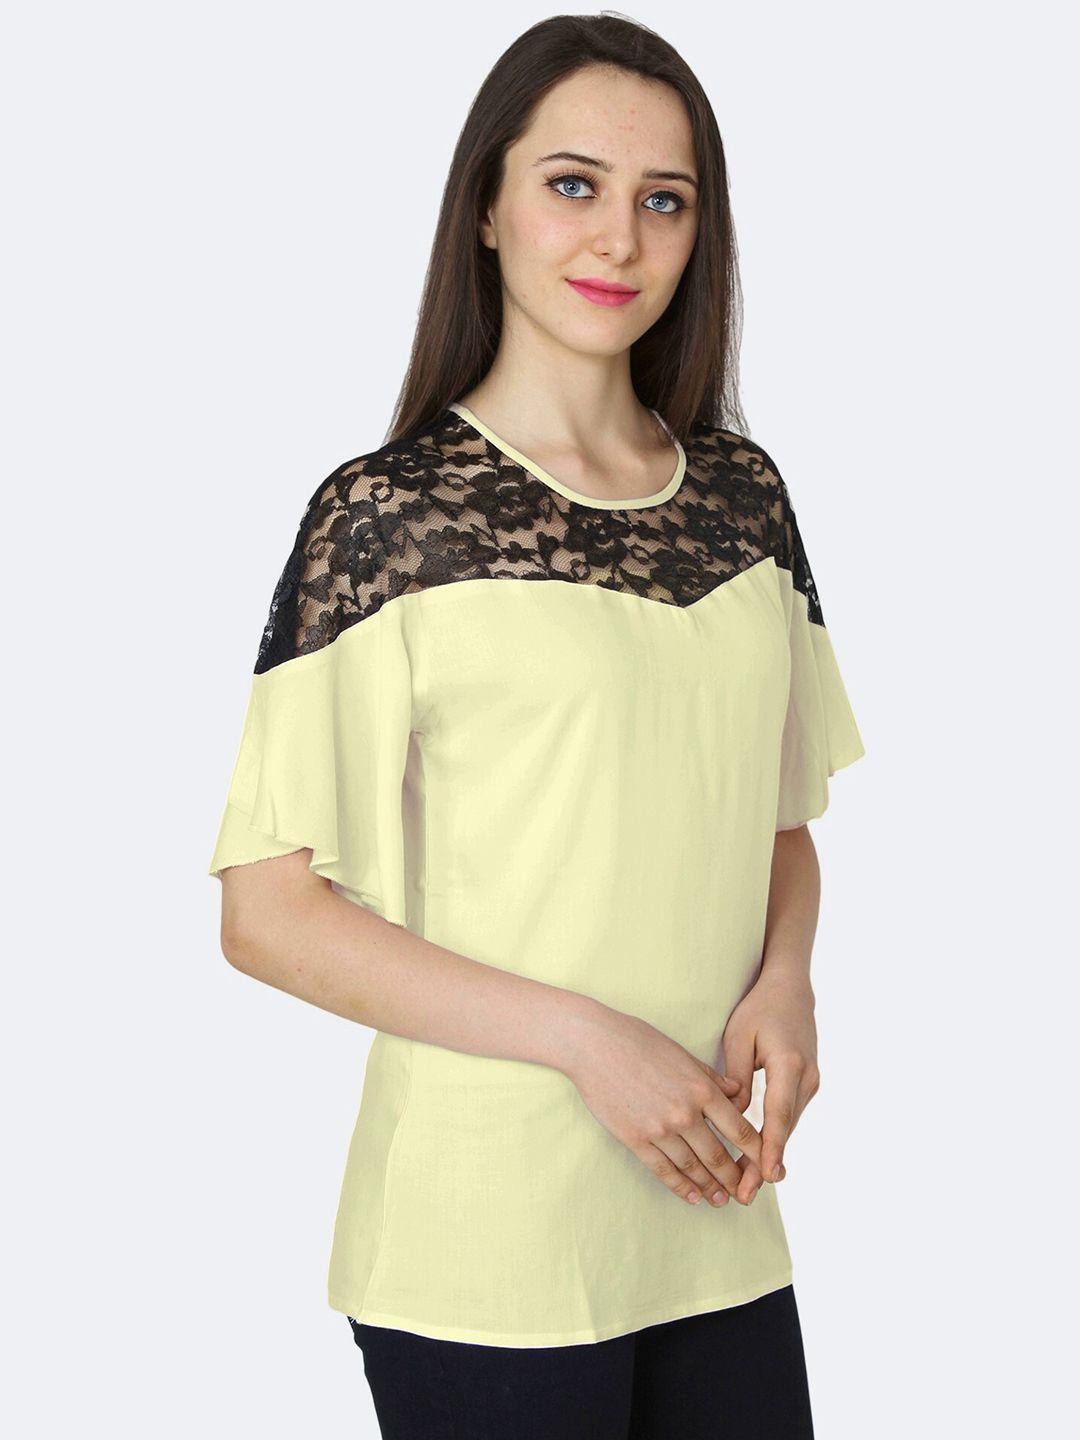 patrorna-women-black-&-yellow-self-design-extended-sleeves-top